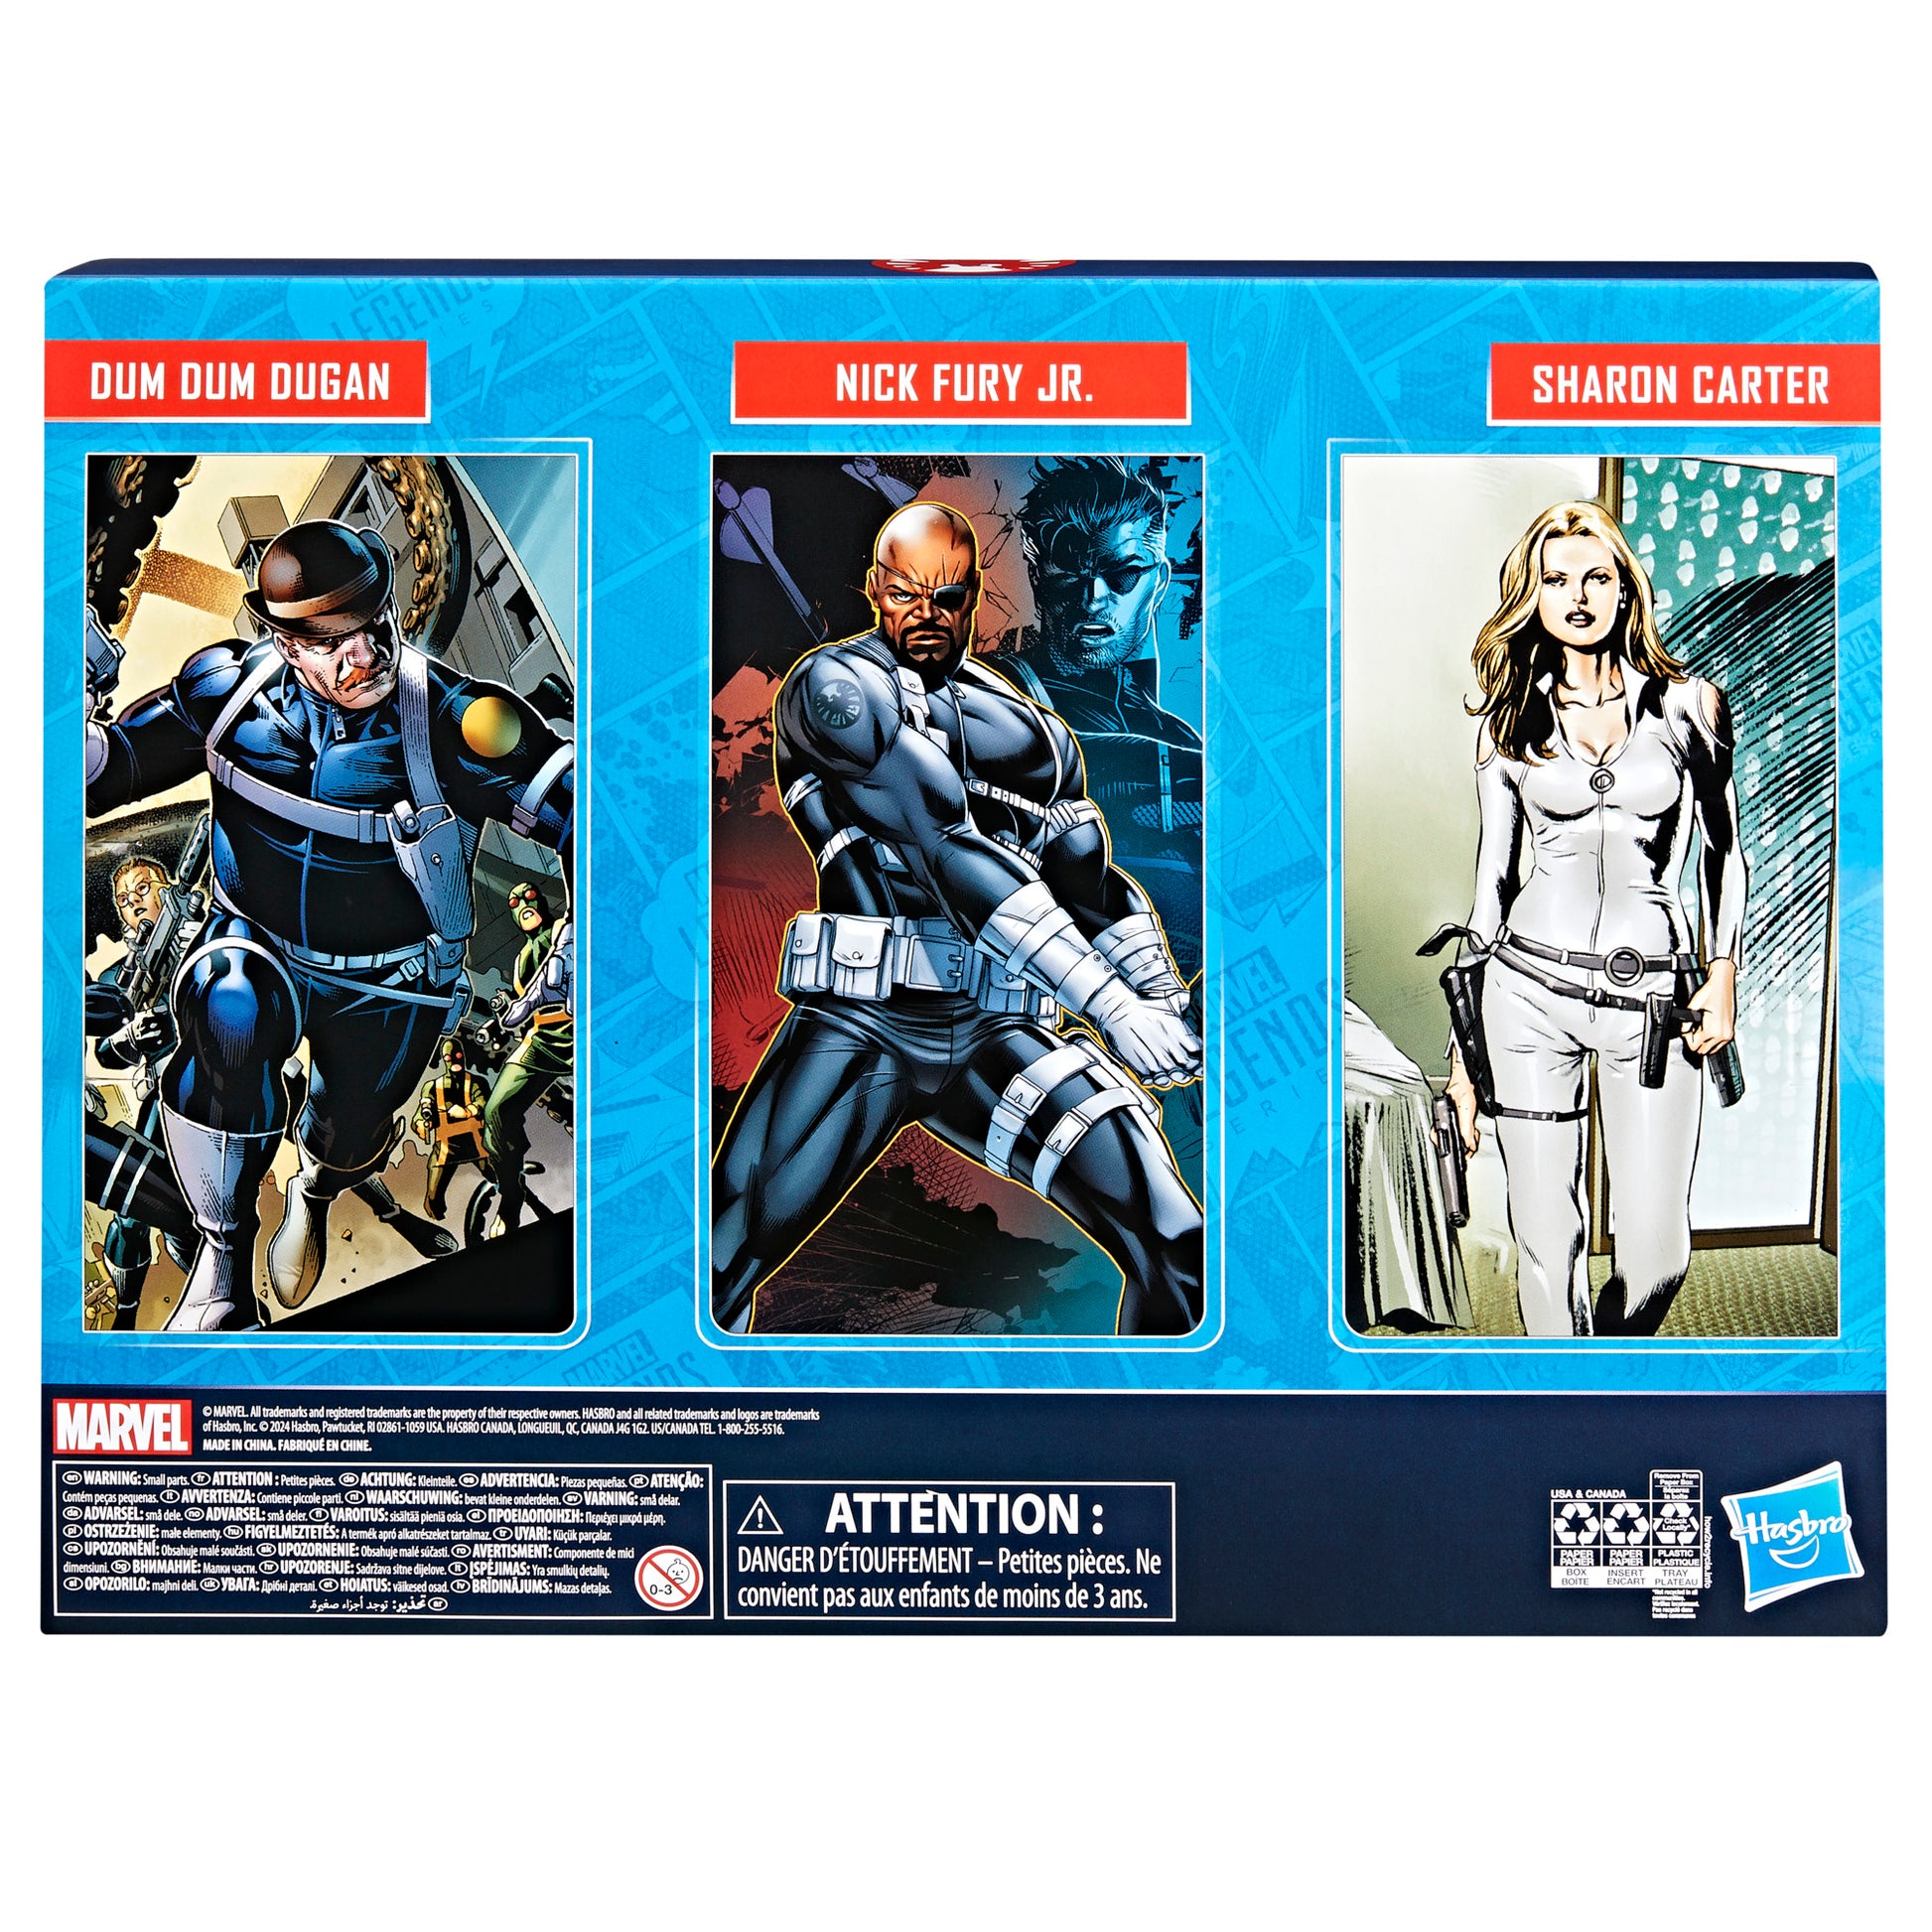 Marvel Legends Series S.H.I.E.L.D 3-Pack, Captain America Comics Collectible 6-Inch Action Figures, Nick Fury Jr., Sharon Carter, and Dum Dum Dugan